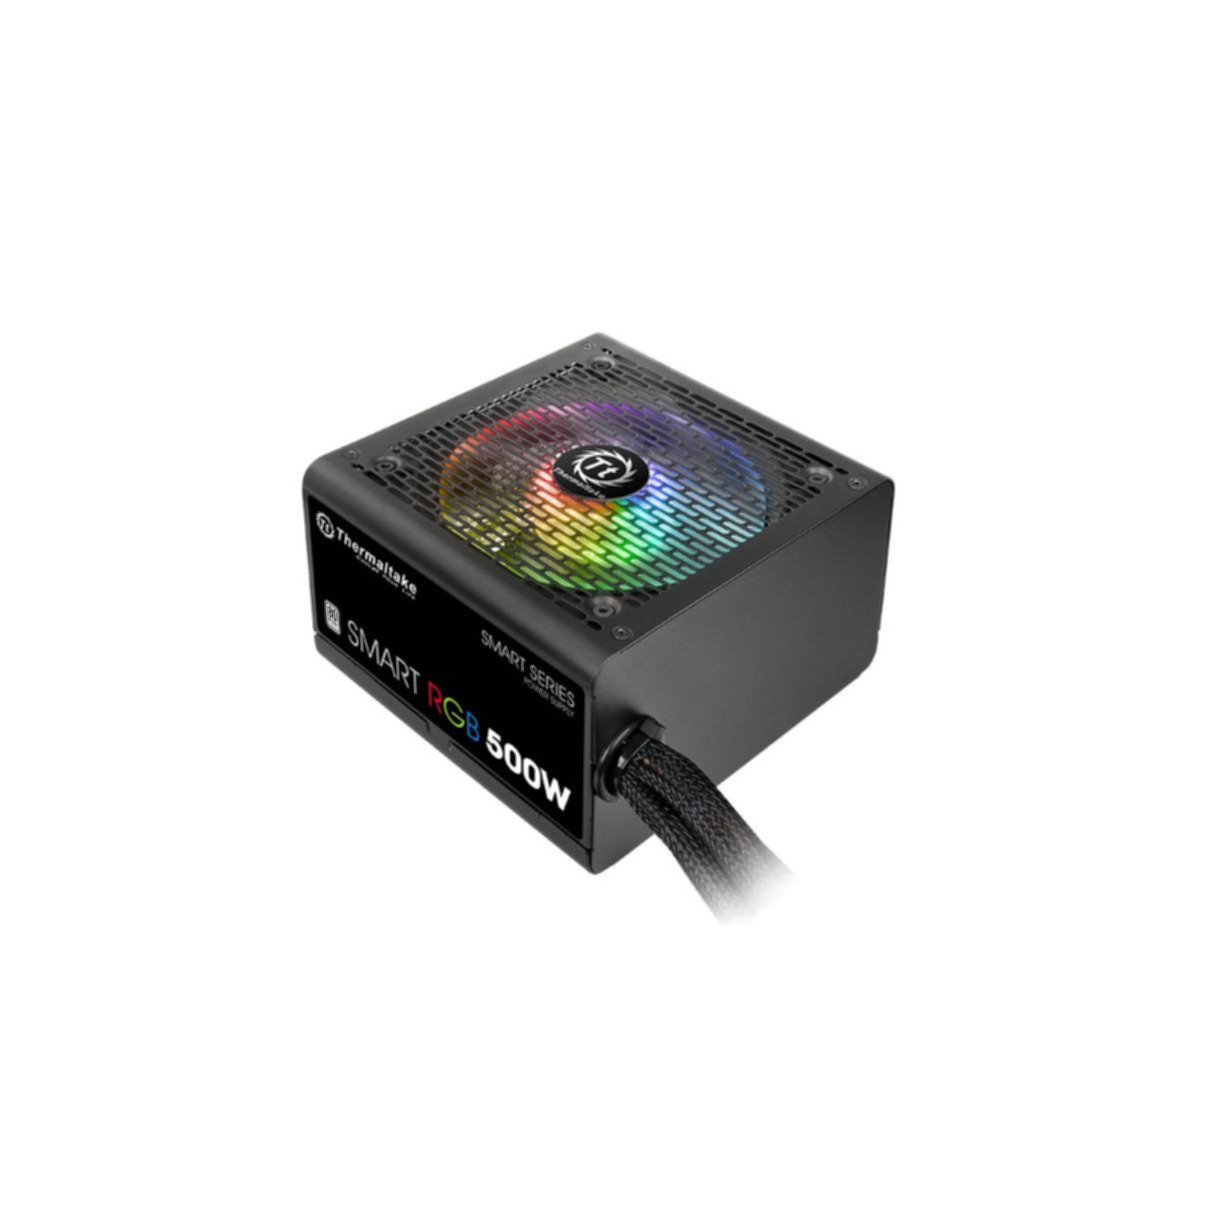 RGB Smart THERMALTAKE 500 PC Netzteil Watt